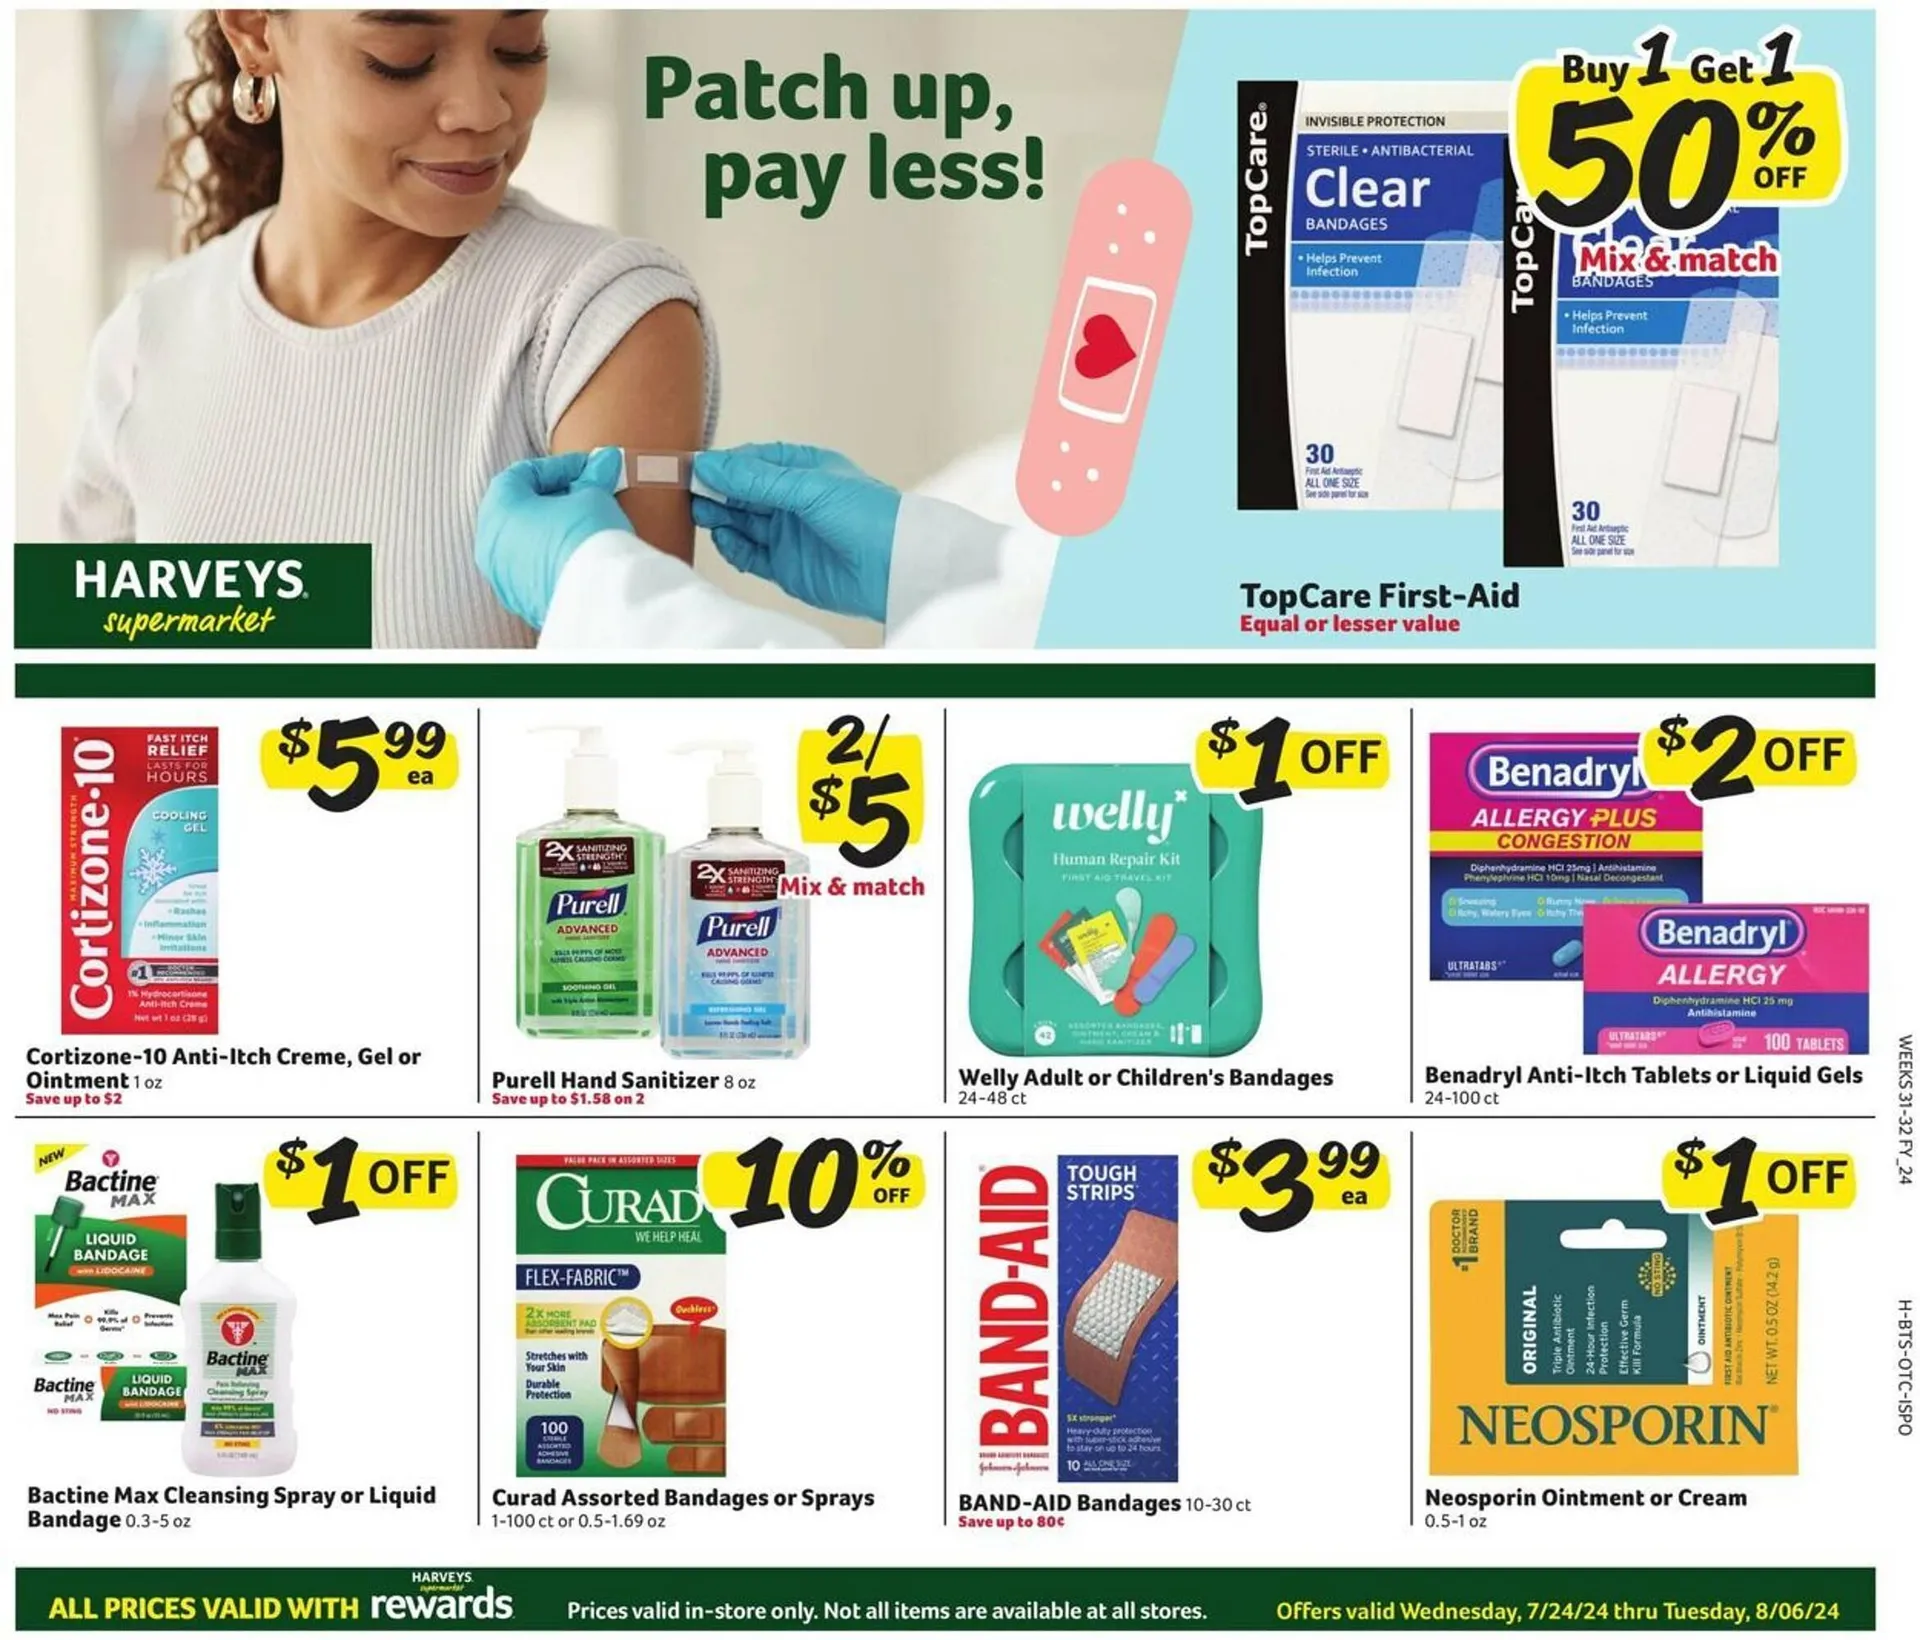 Harveys Supermarkets Weekly Ad - 1